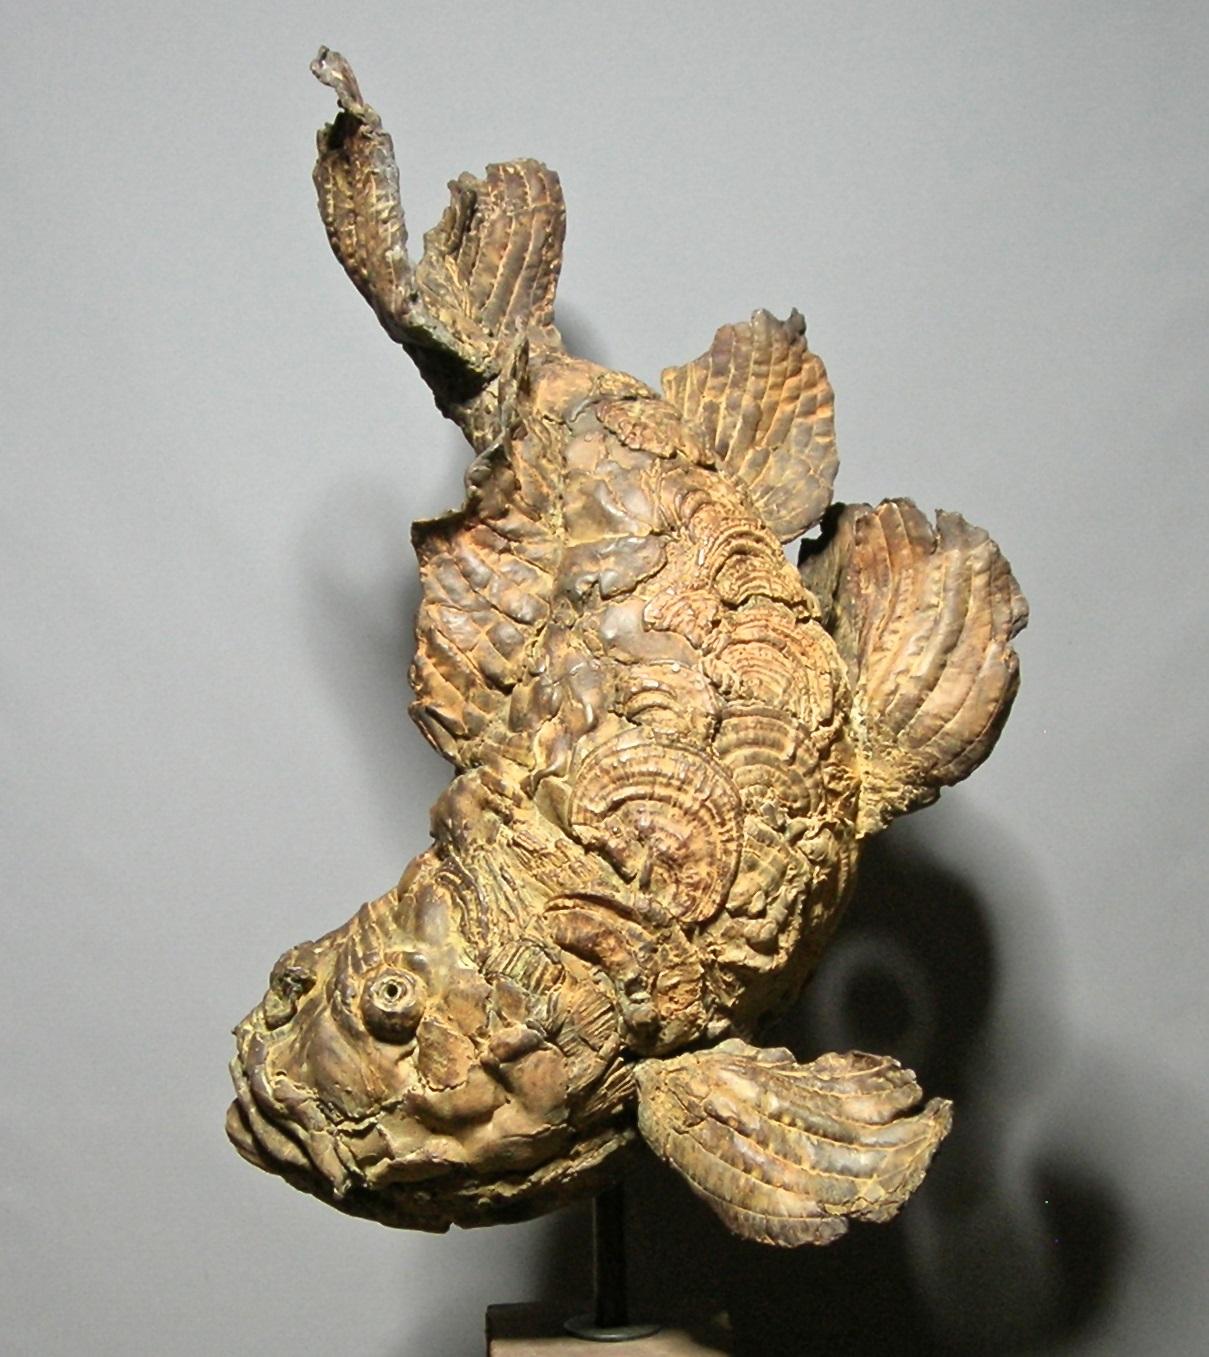 Ferox Fierce Fish Bronze Sculpture on Stone  - Gold Figurative Sculpture by Pieter Vanden Daele